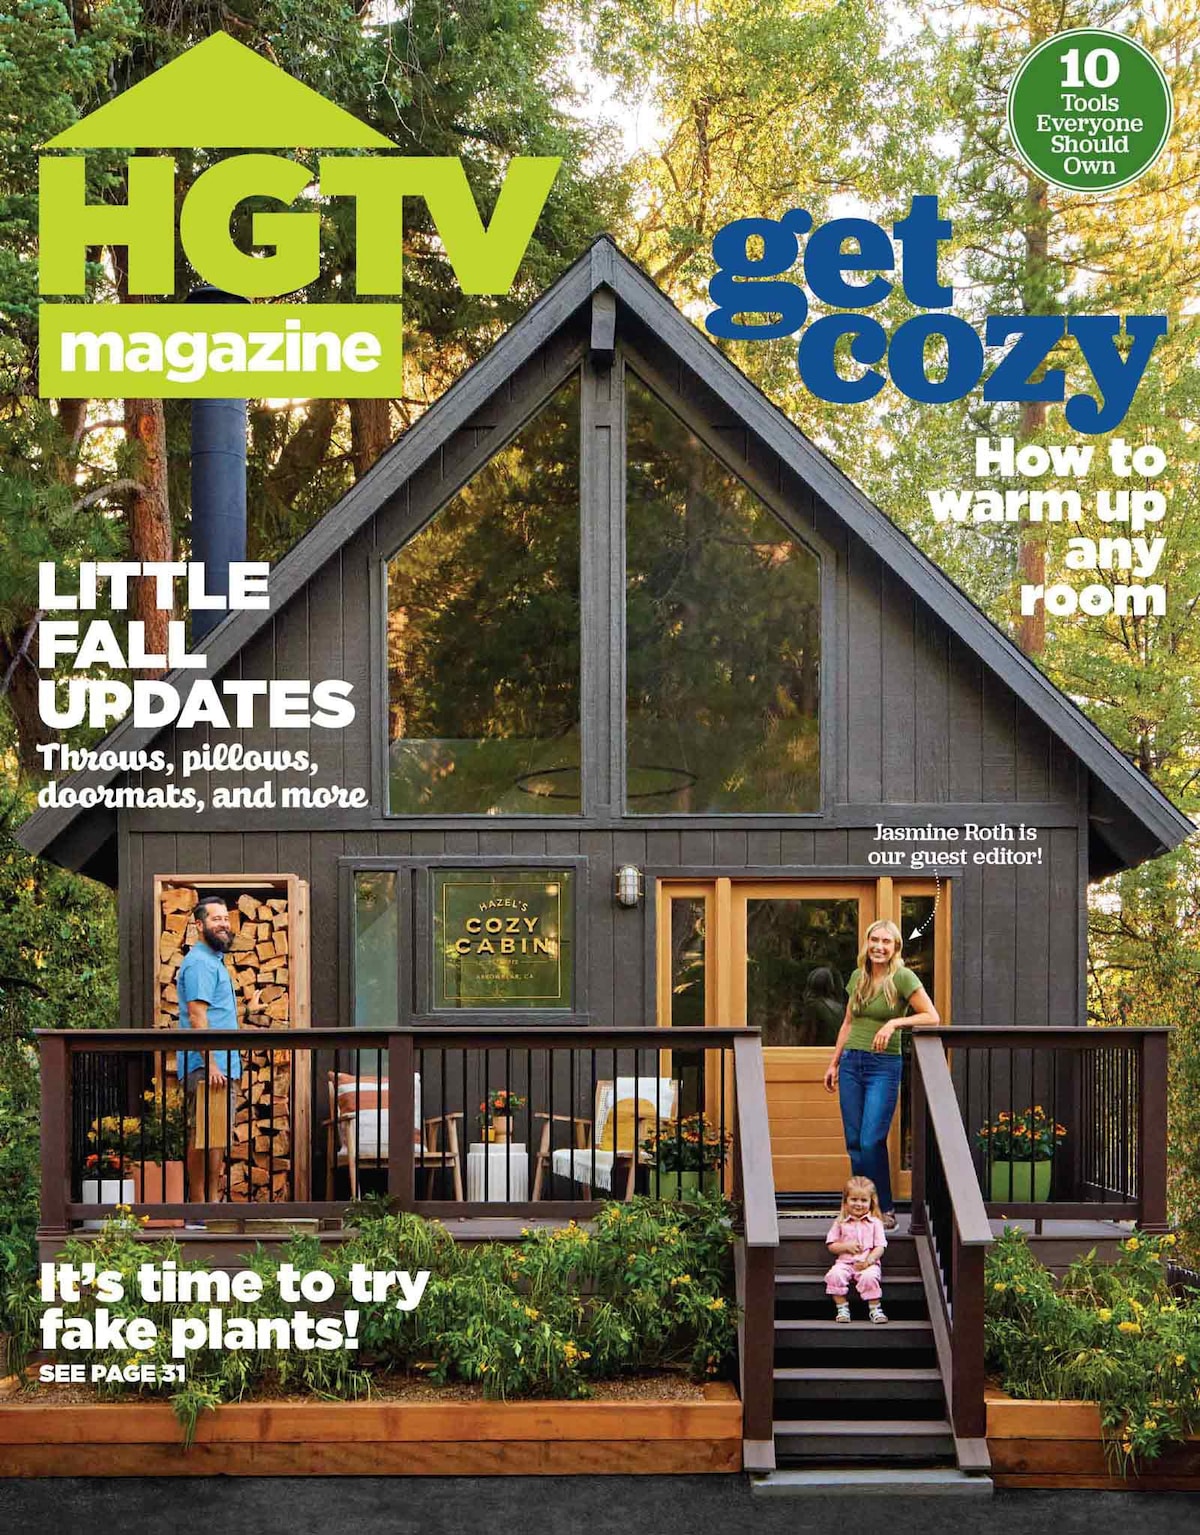 Hazel's Cozy Cabin, by HGTV's Jasmine Roth